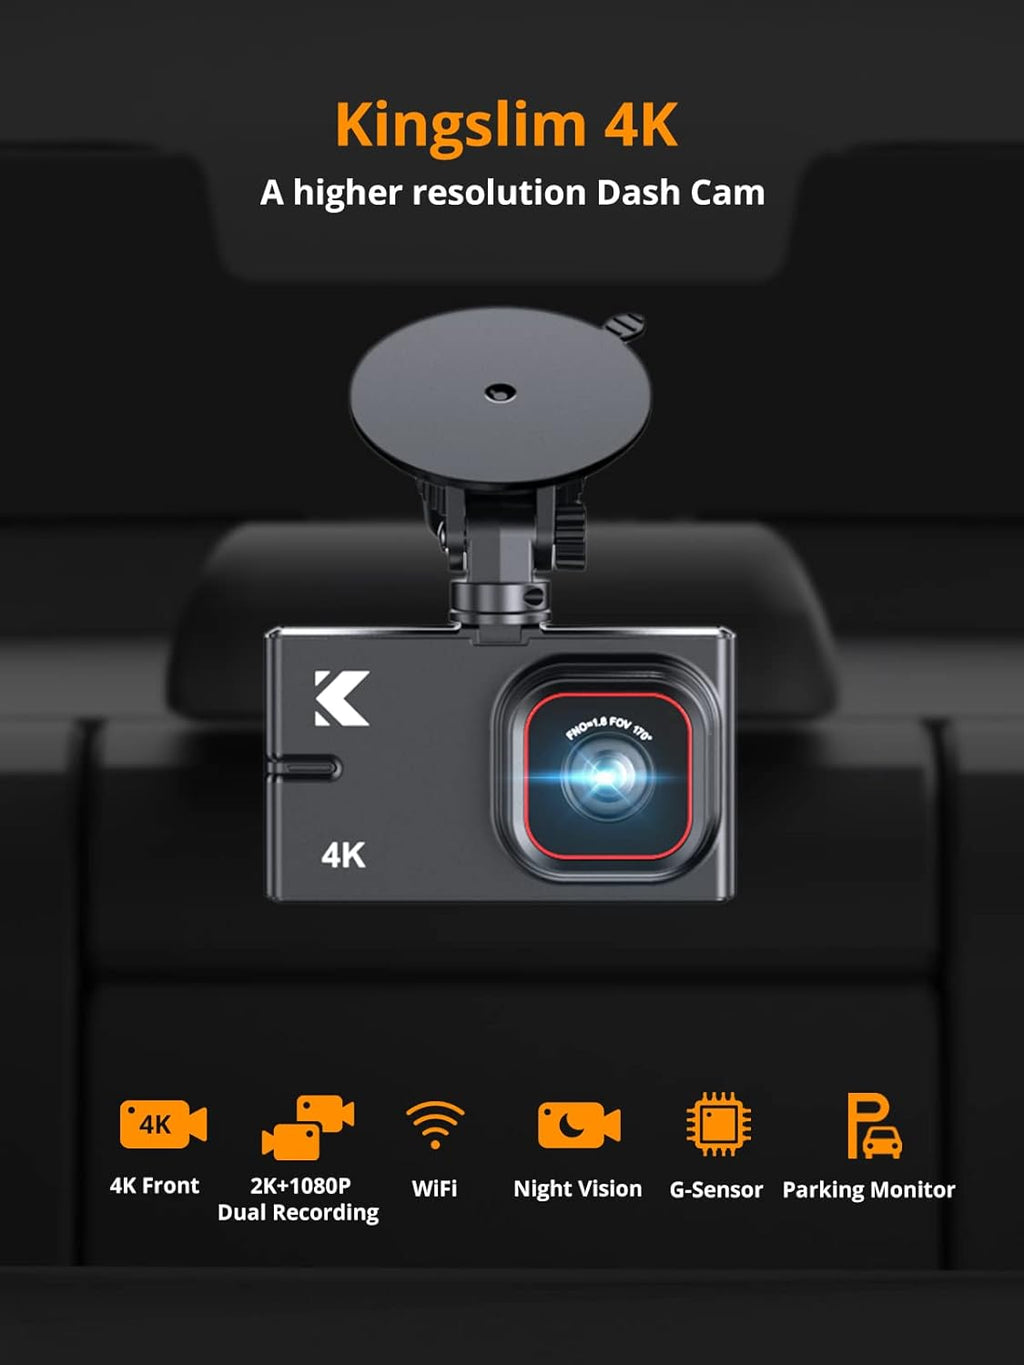 No Phone Needed: Kingslim D4 Dash Cam Review